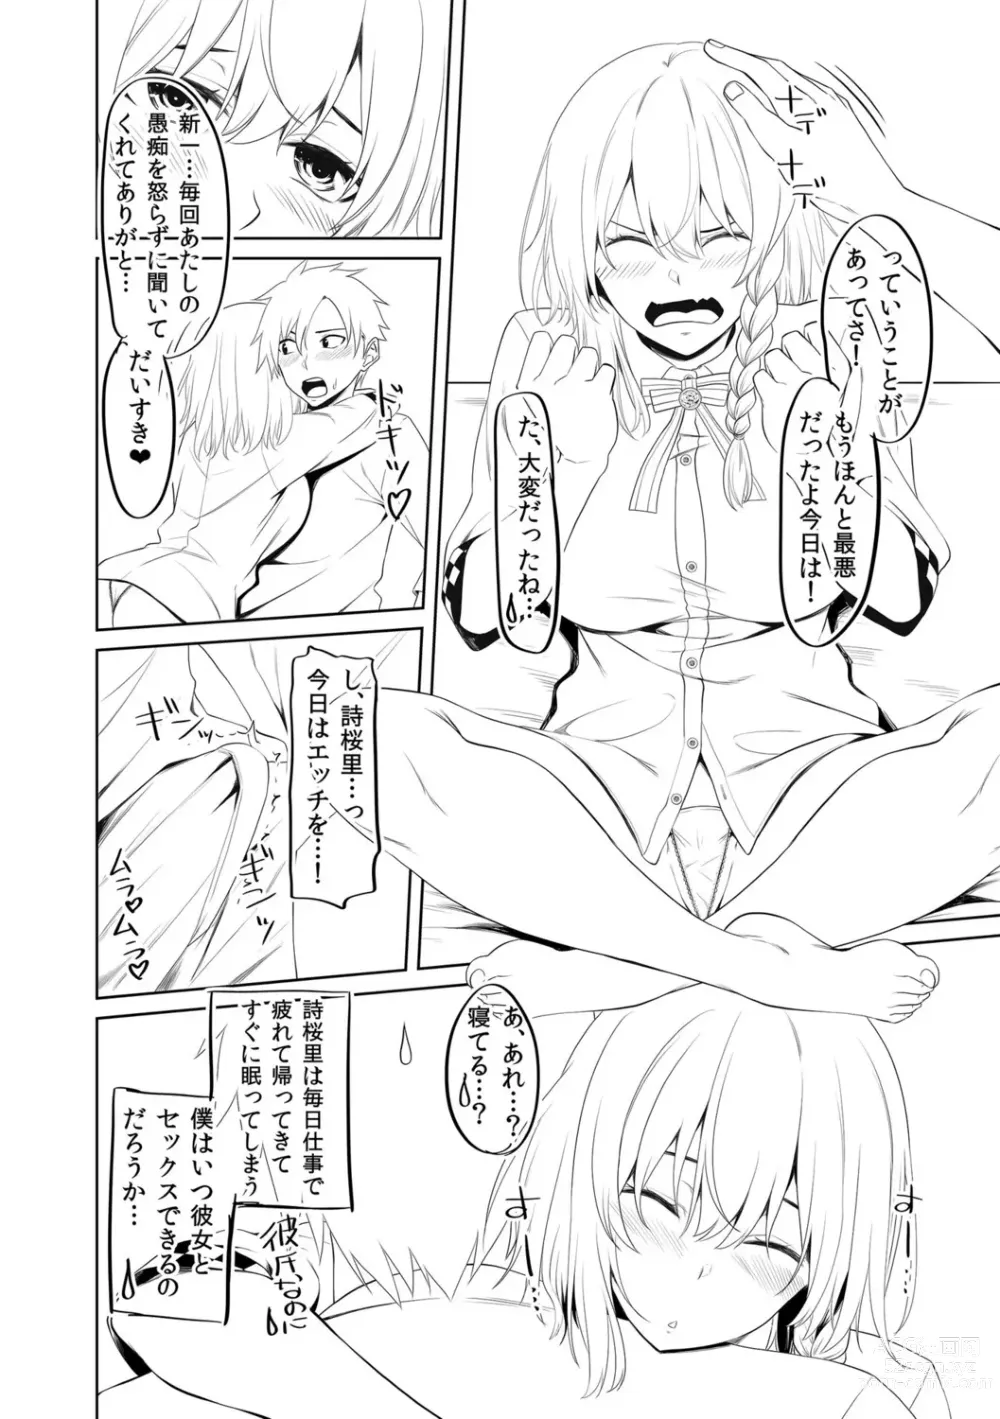 Page 324 of manga Watashi o SeFri ni Shite Minai? - Would you like to try me as a sex friend? + Digital Tokusouban  Tokuten